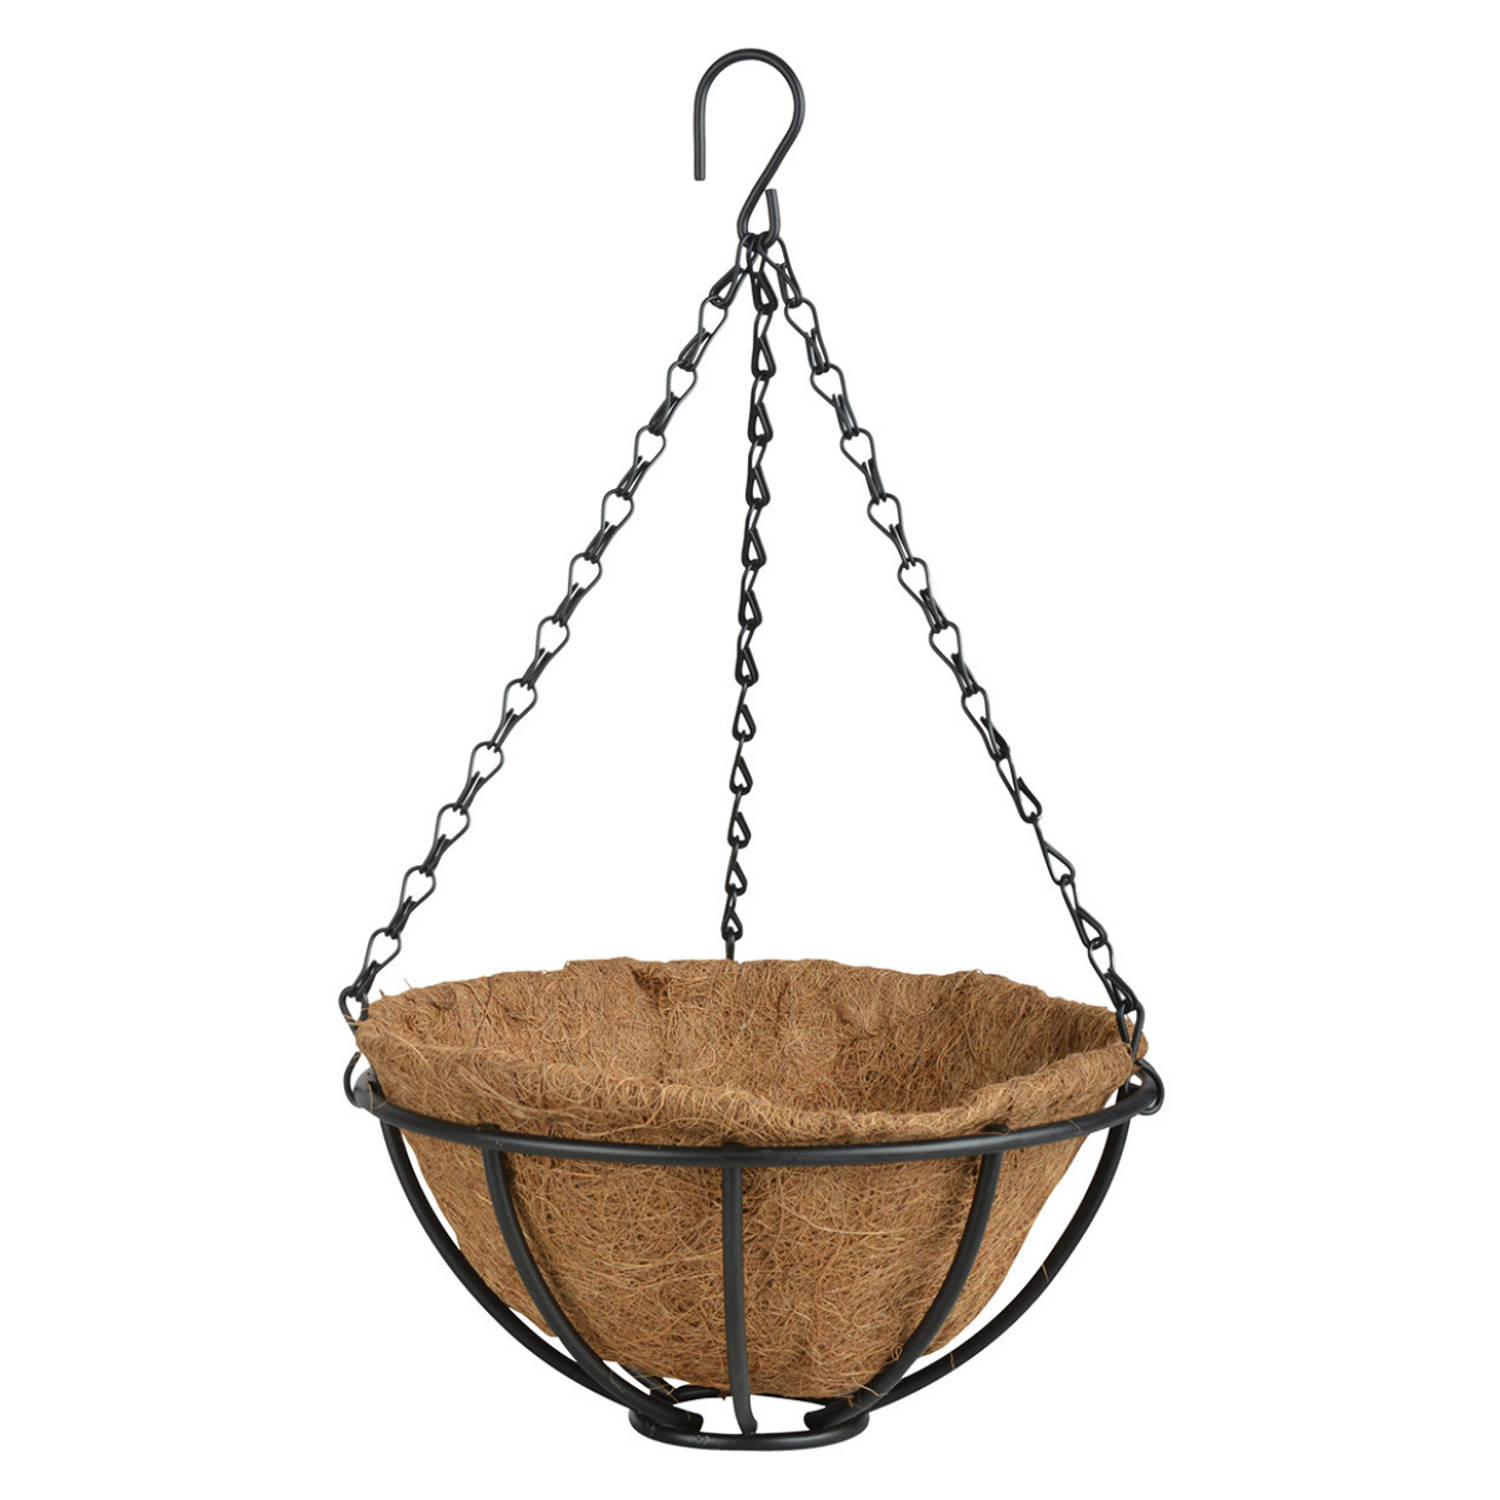 Metalen hanging basket 25cm<br ->
(excl plant)